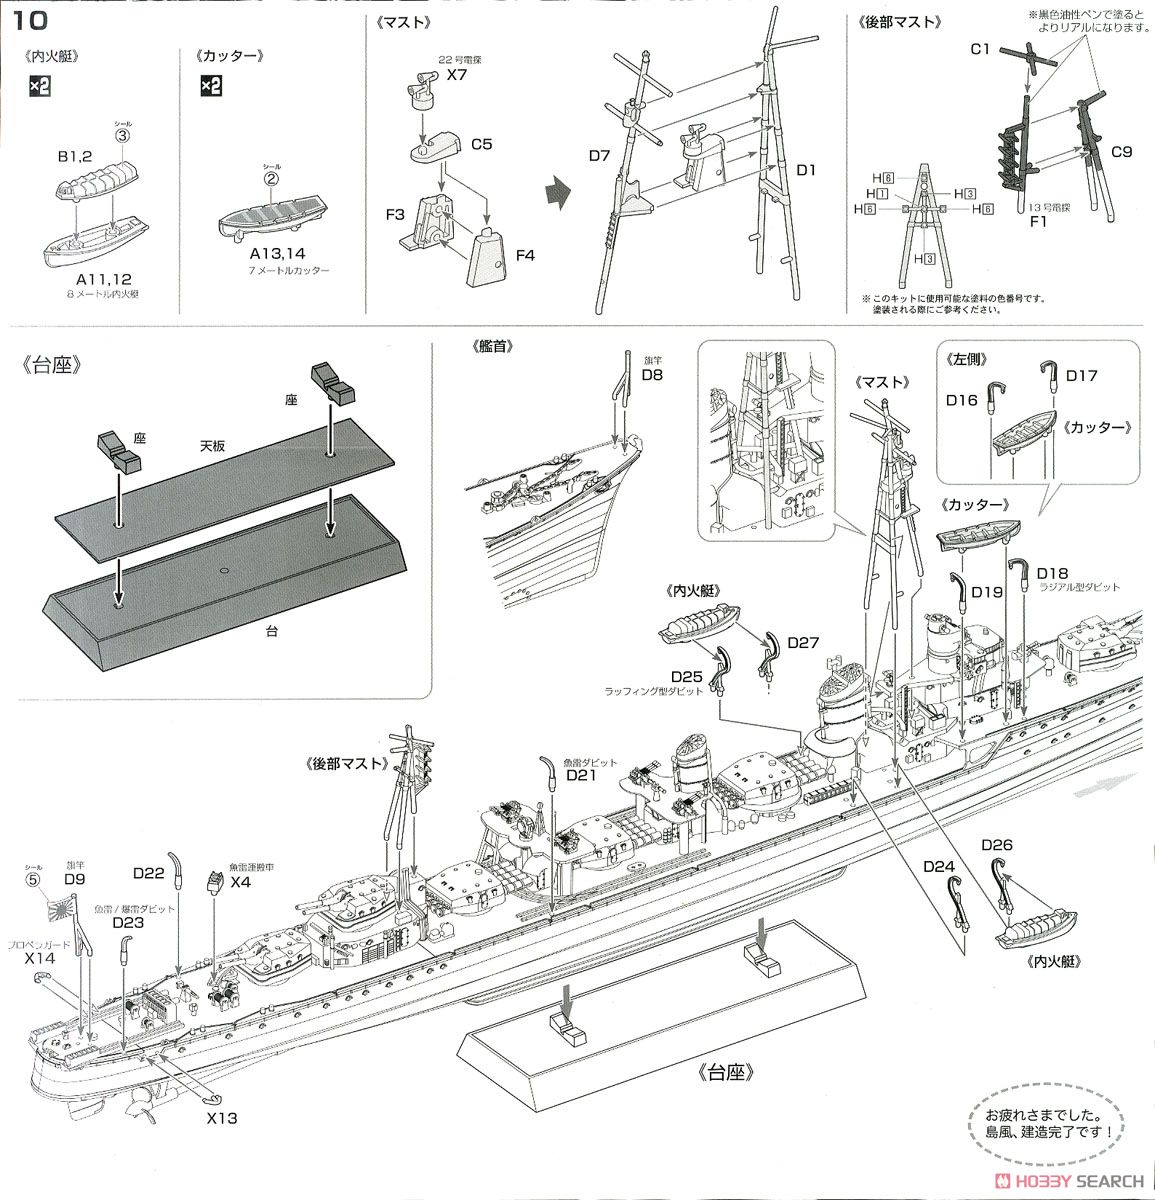 日本海軍駆逐艦 島風 最終時/昭和19年 (プラモデル) 設計図6